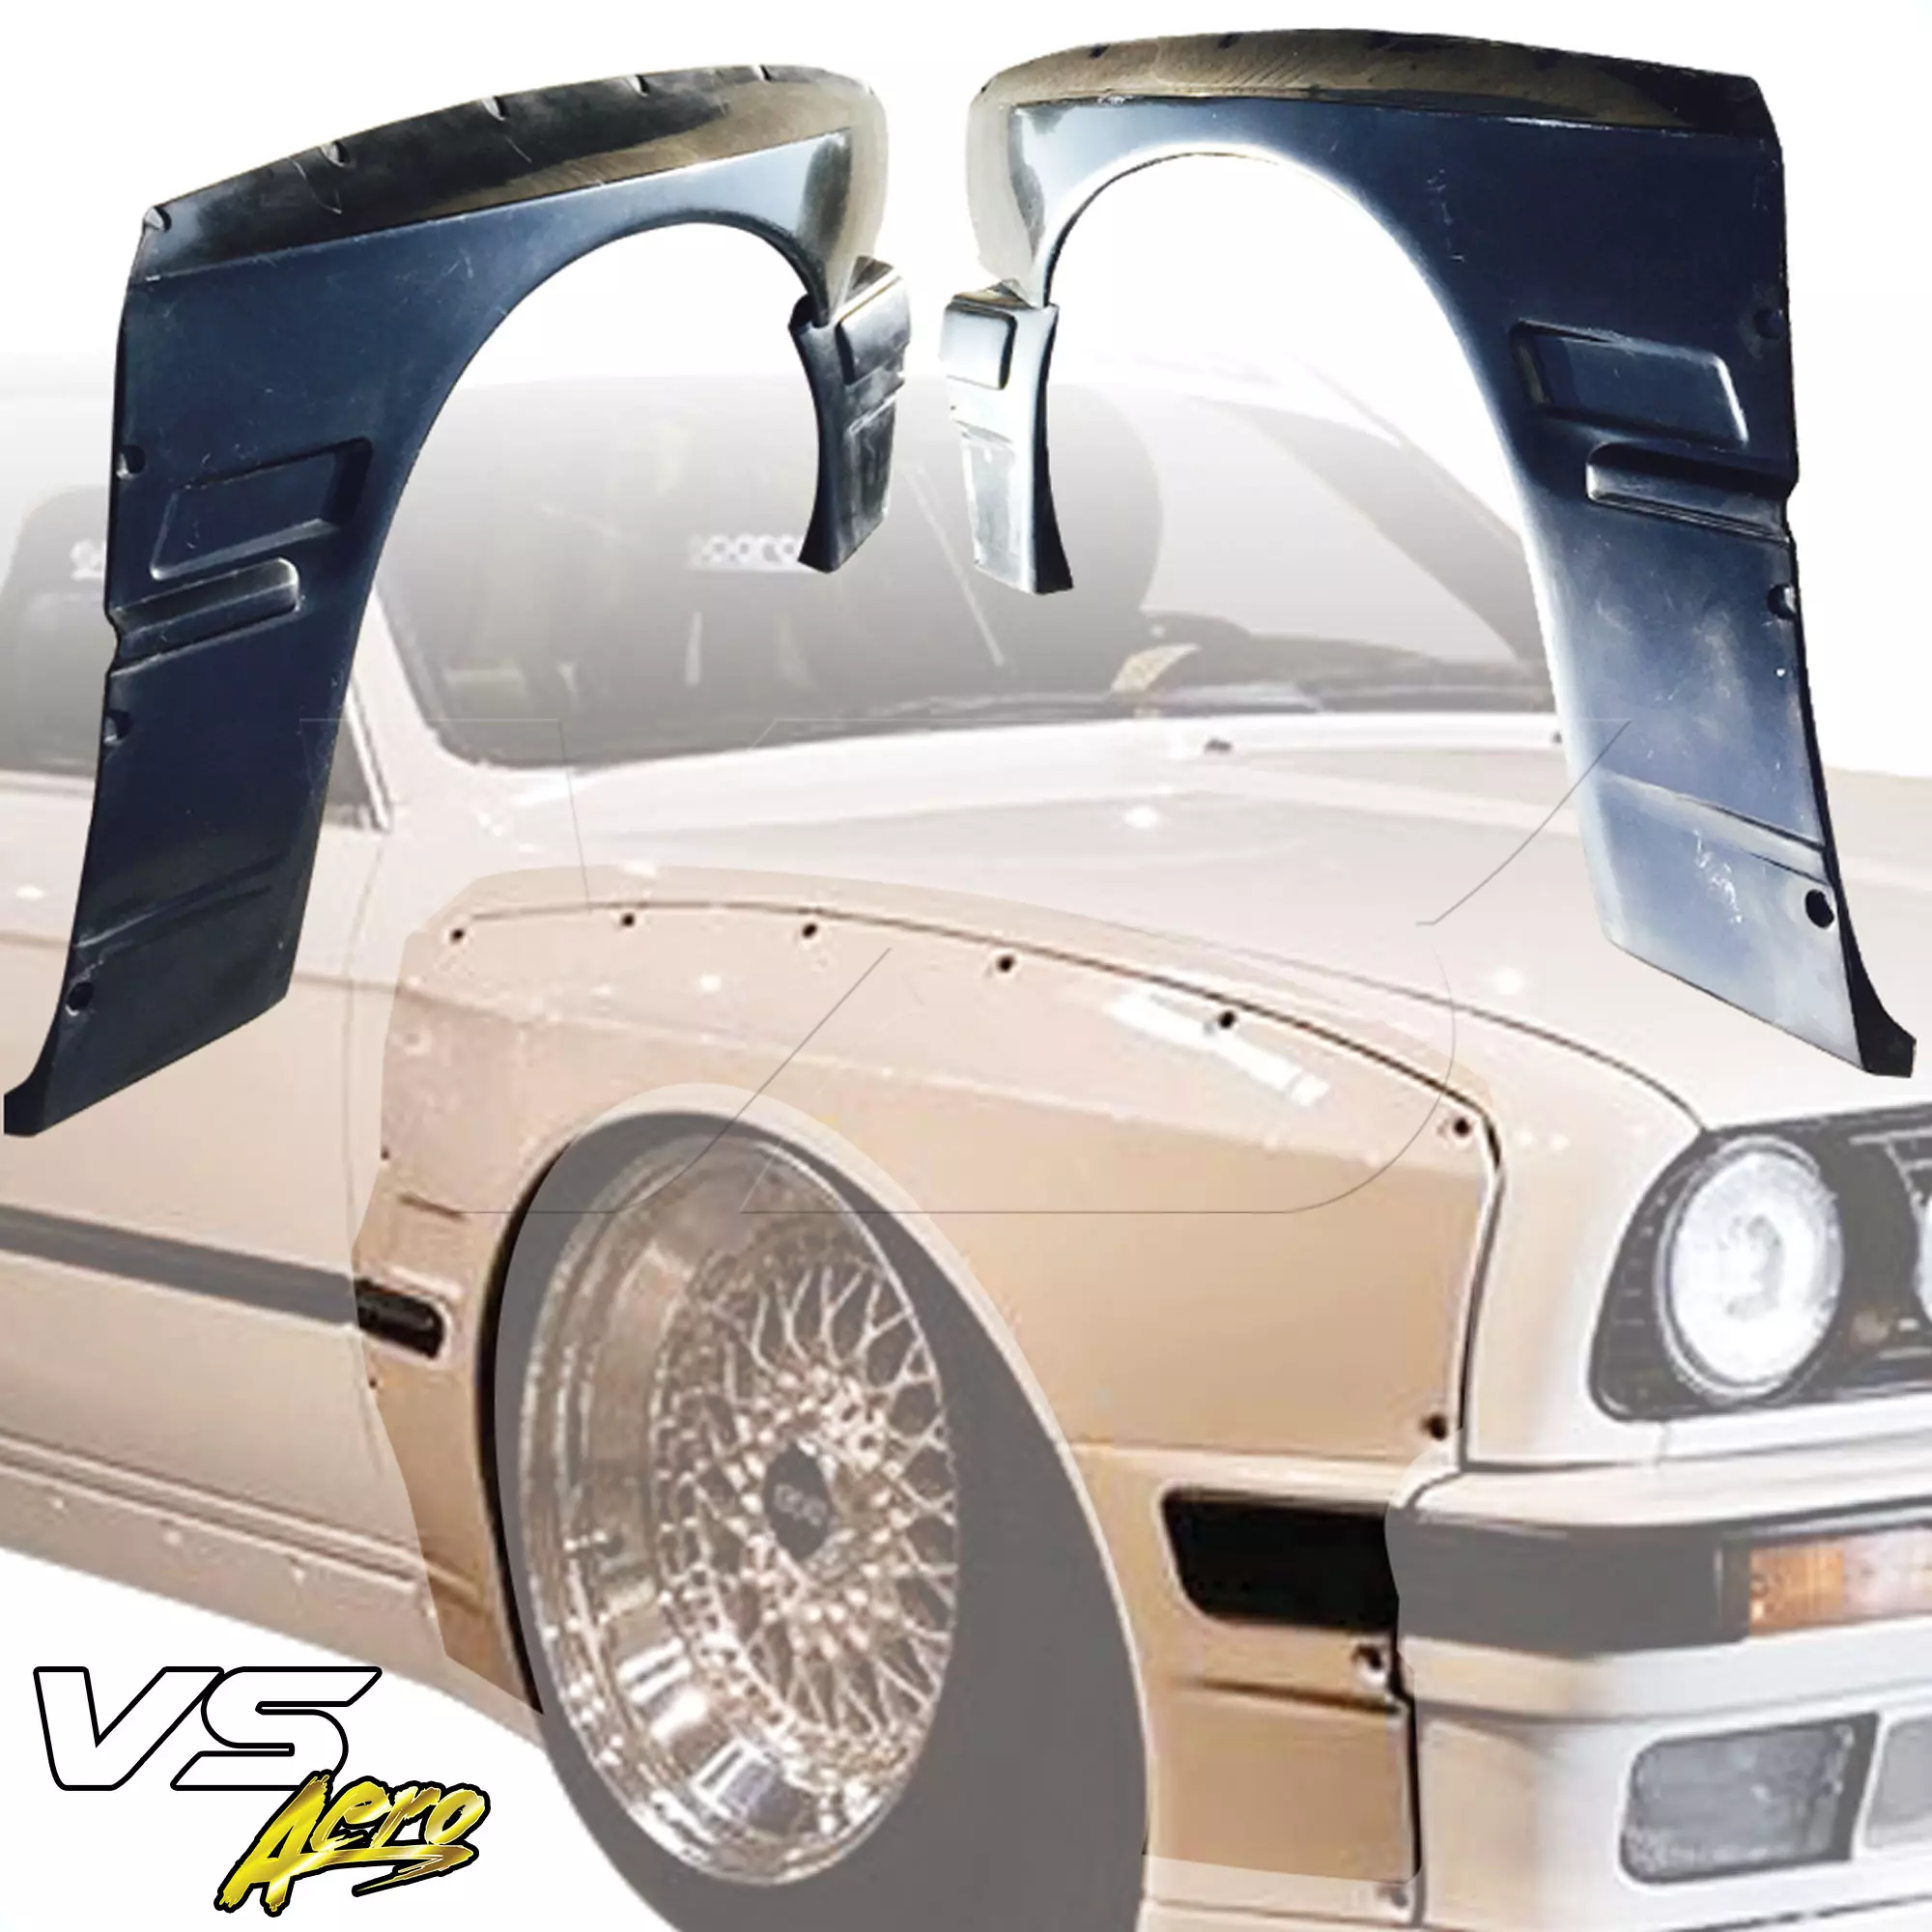 VSaero FRP TKYO Wide Body 50mm Fender Flares (front) 4pc > BMW 3-Series 318i 325i E30 1984-1991> 2dr Coupe - Image 1